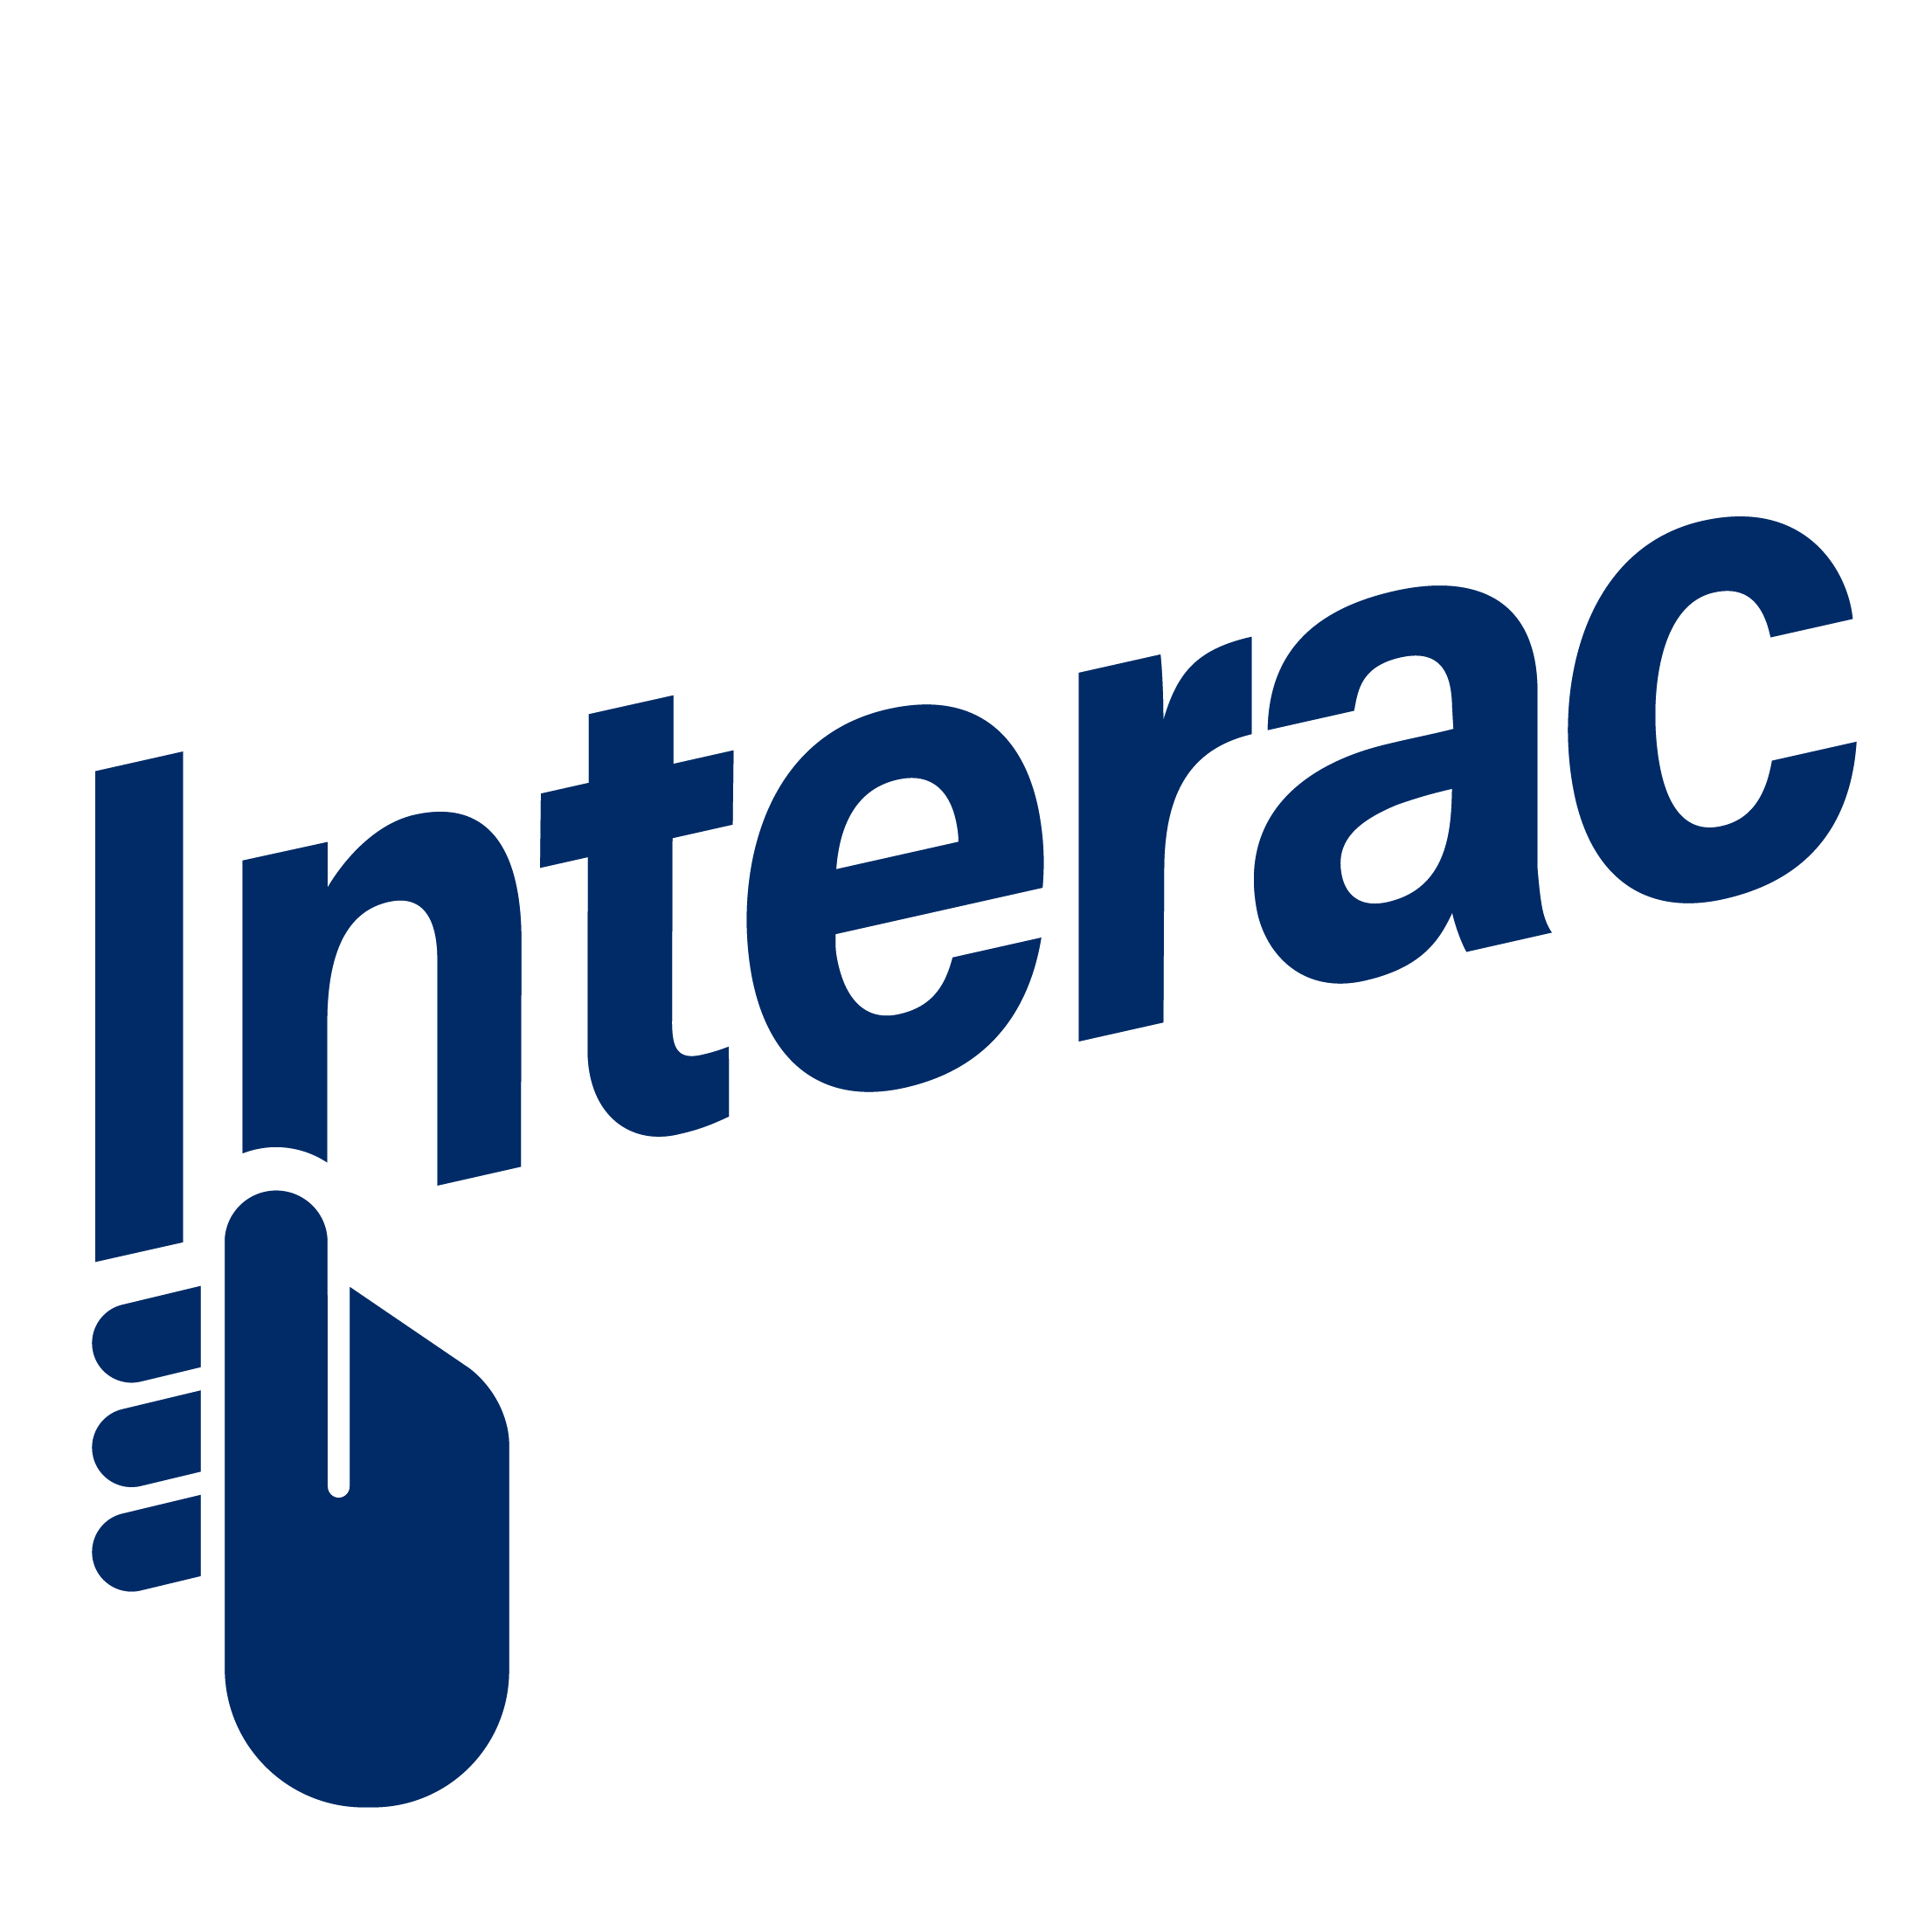 Interac Icon